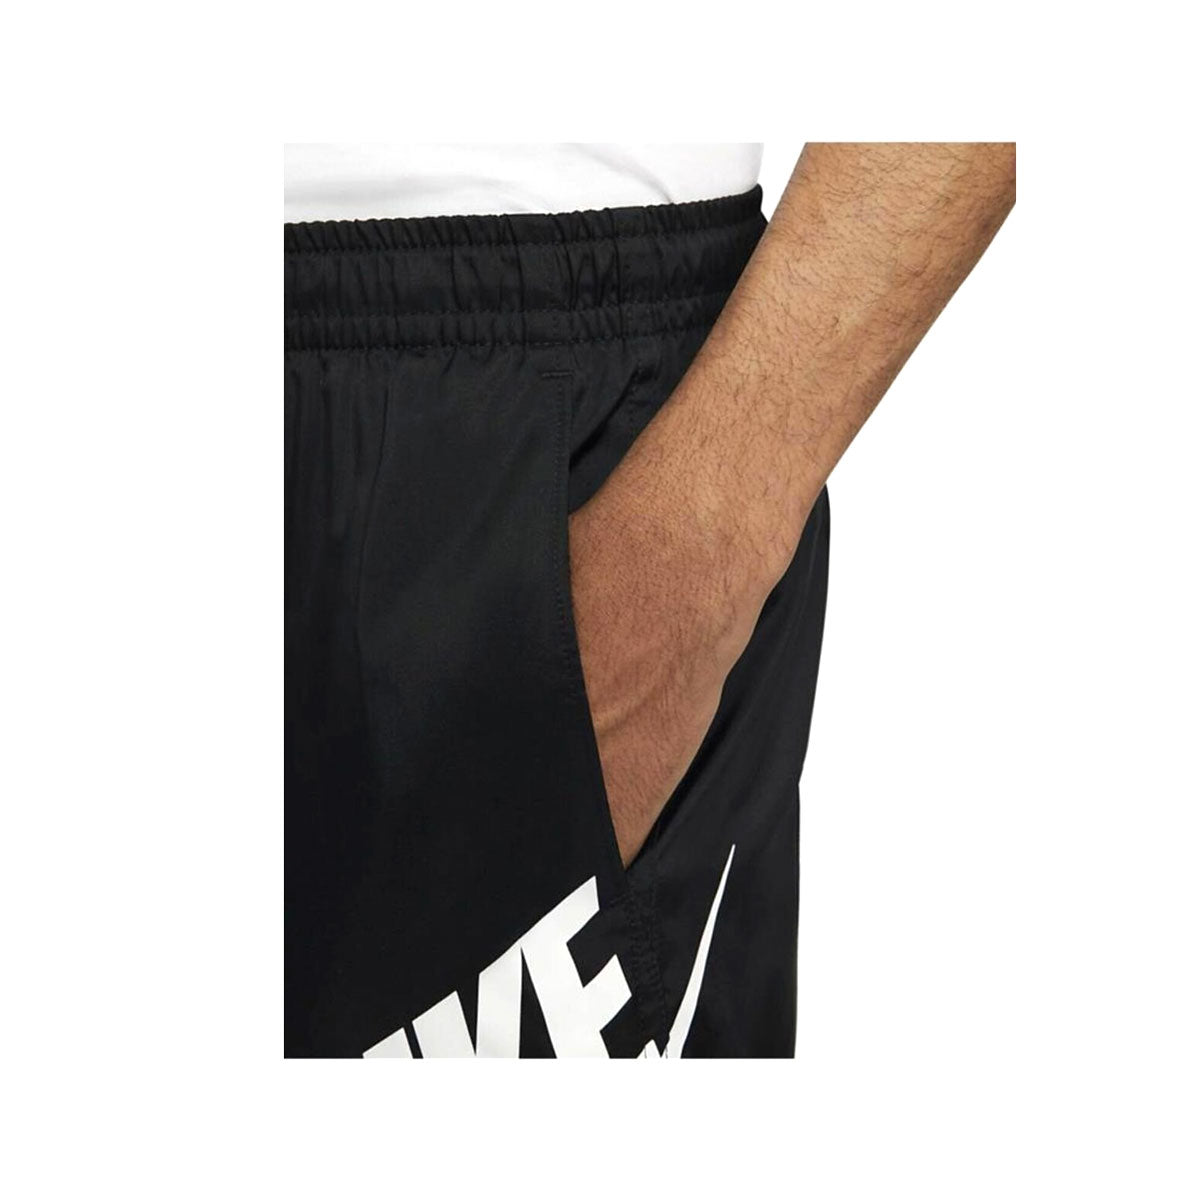 Nike Men's Sportswear Woven Oversized Shorts - KickzStore